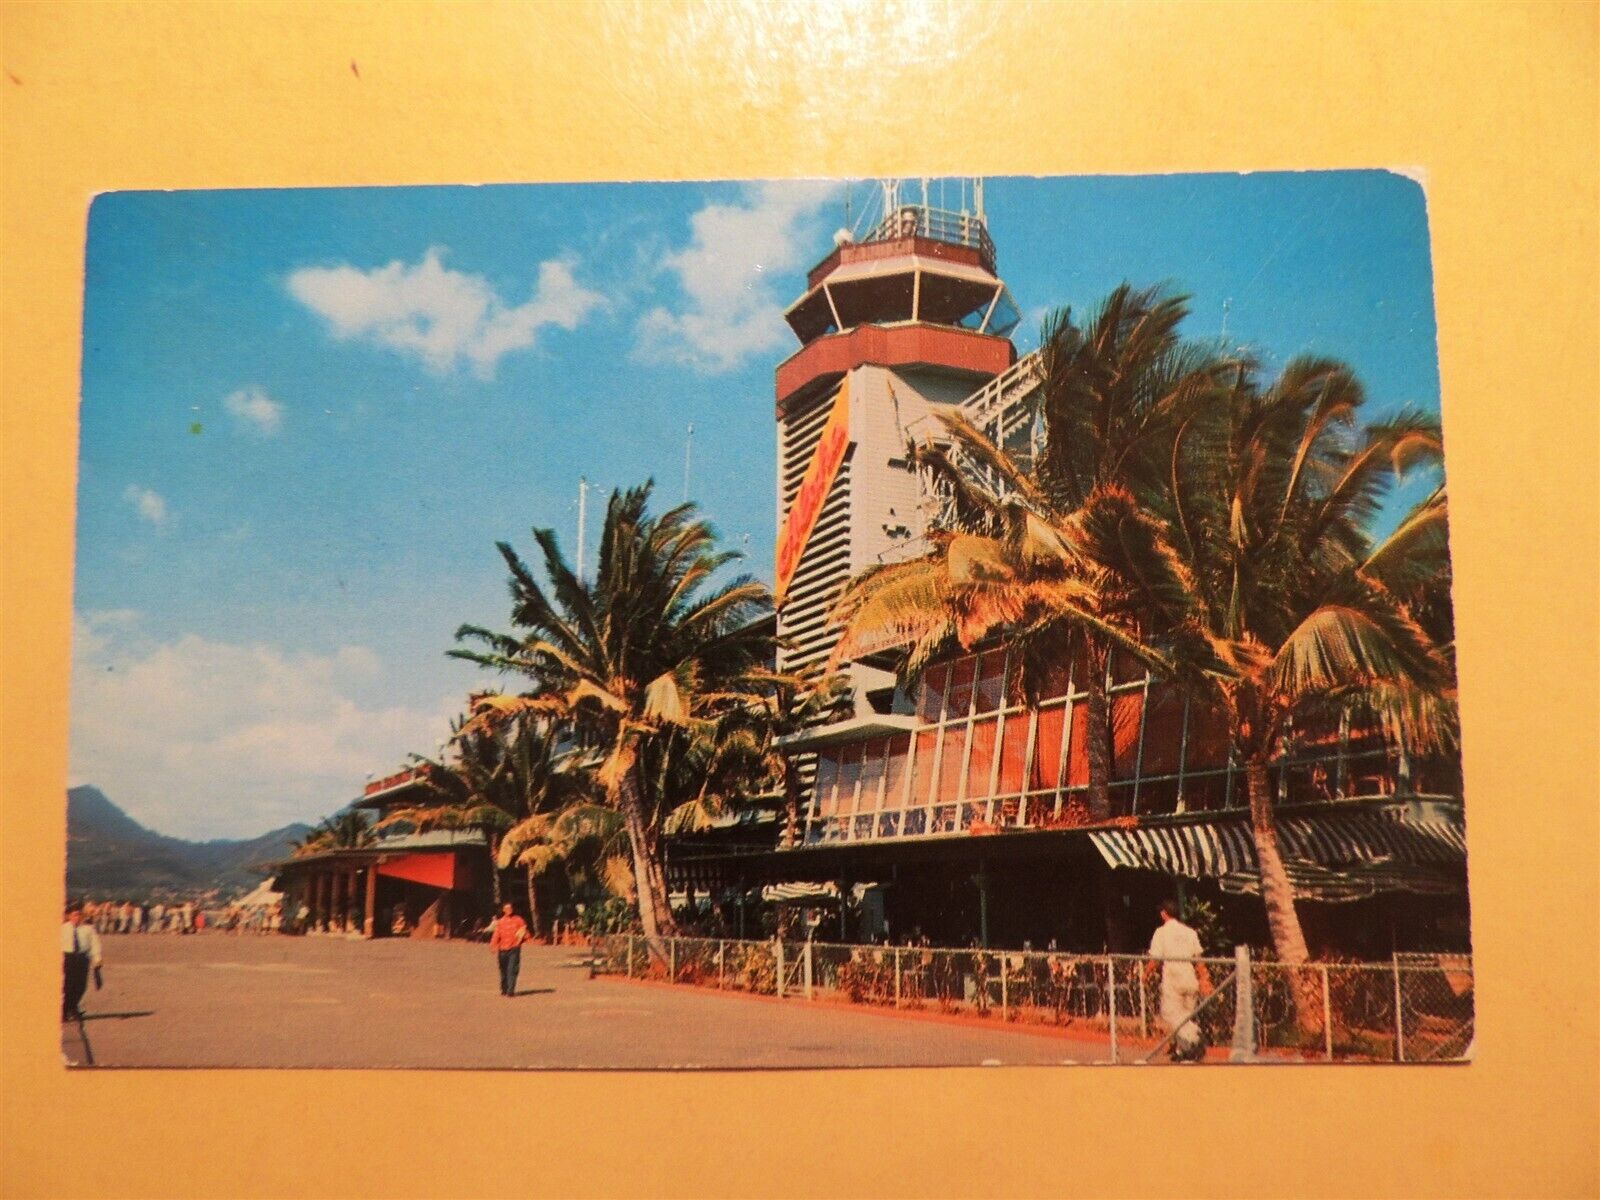 Honolulu International Airport Oahu Hawaii vintage postcard 